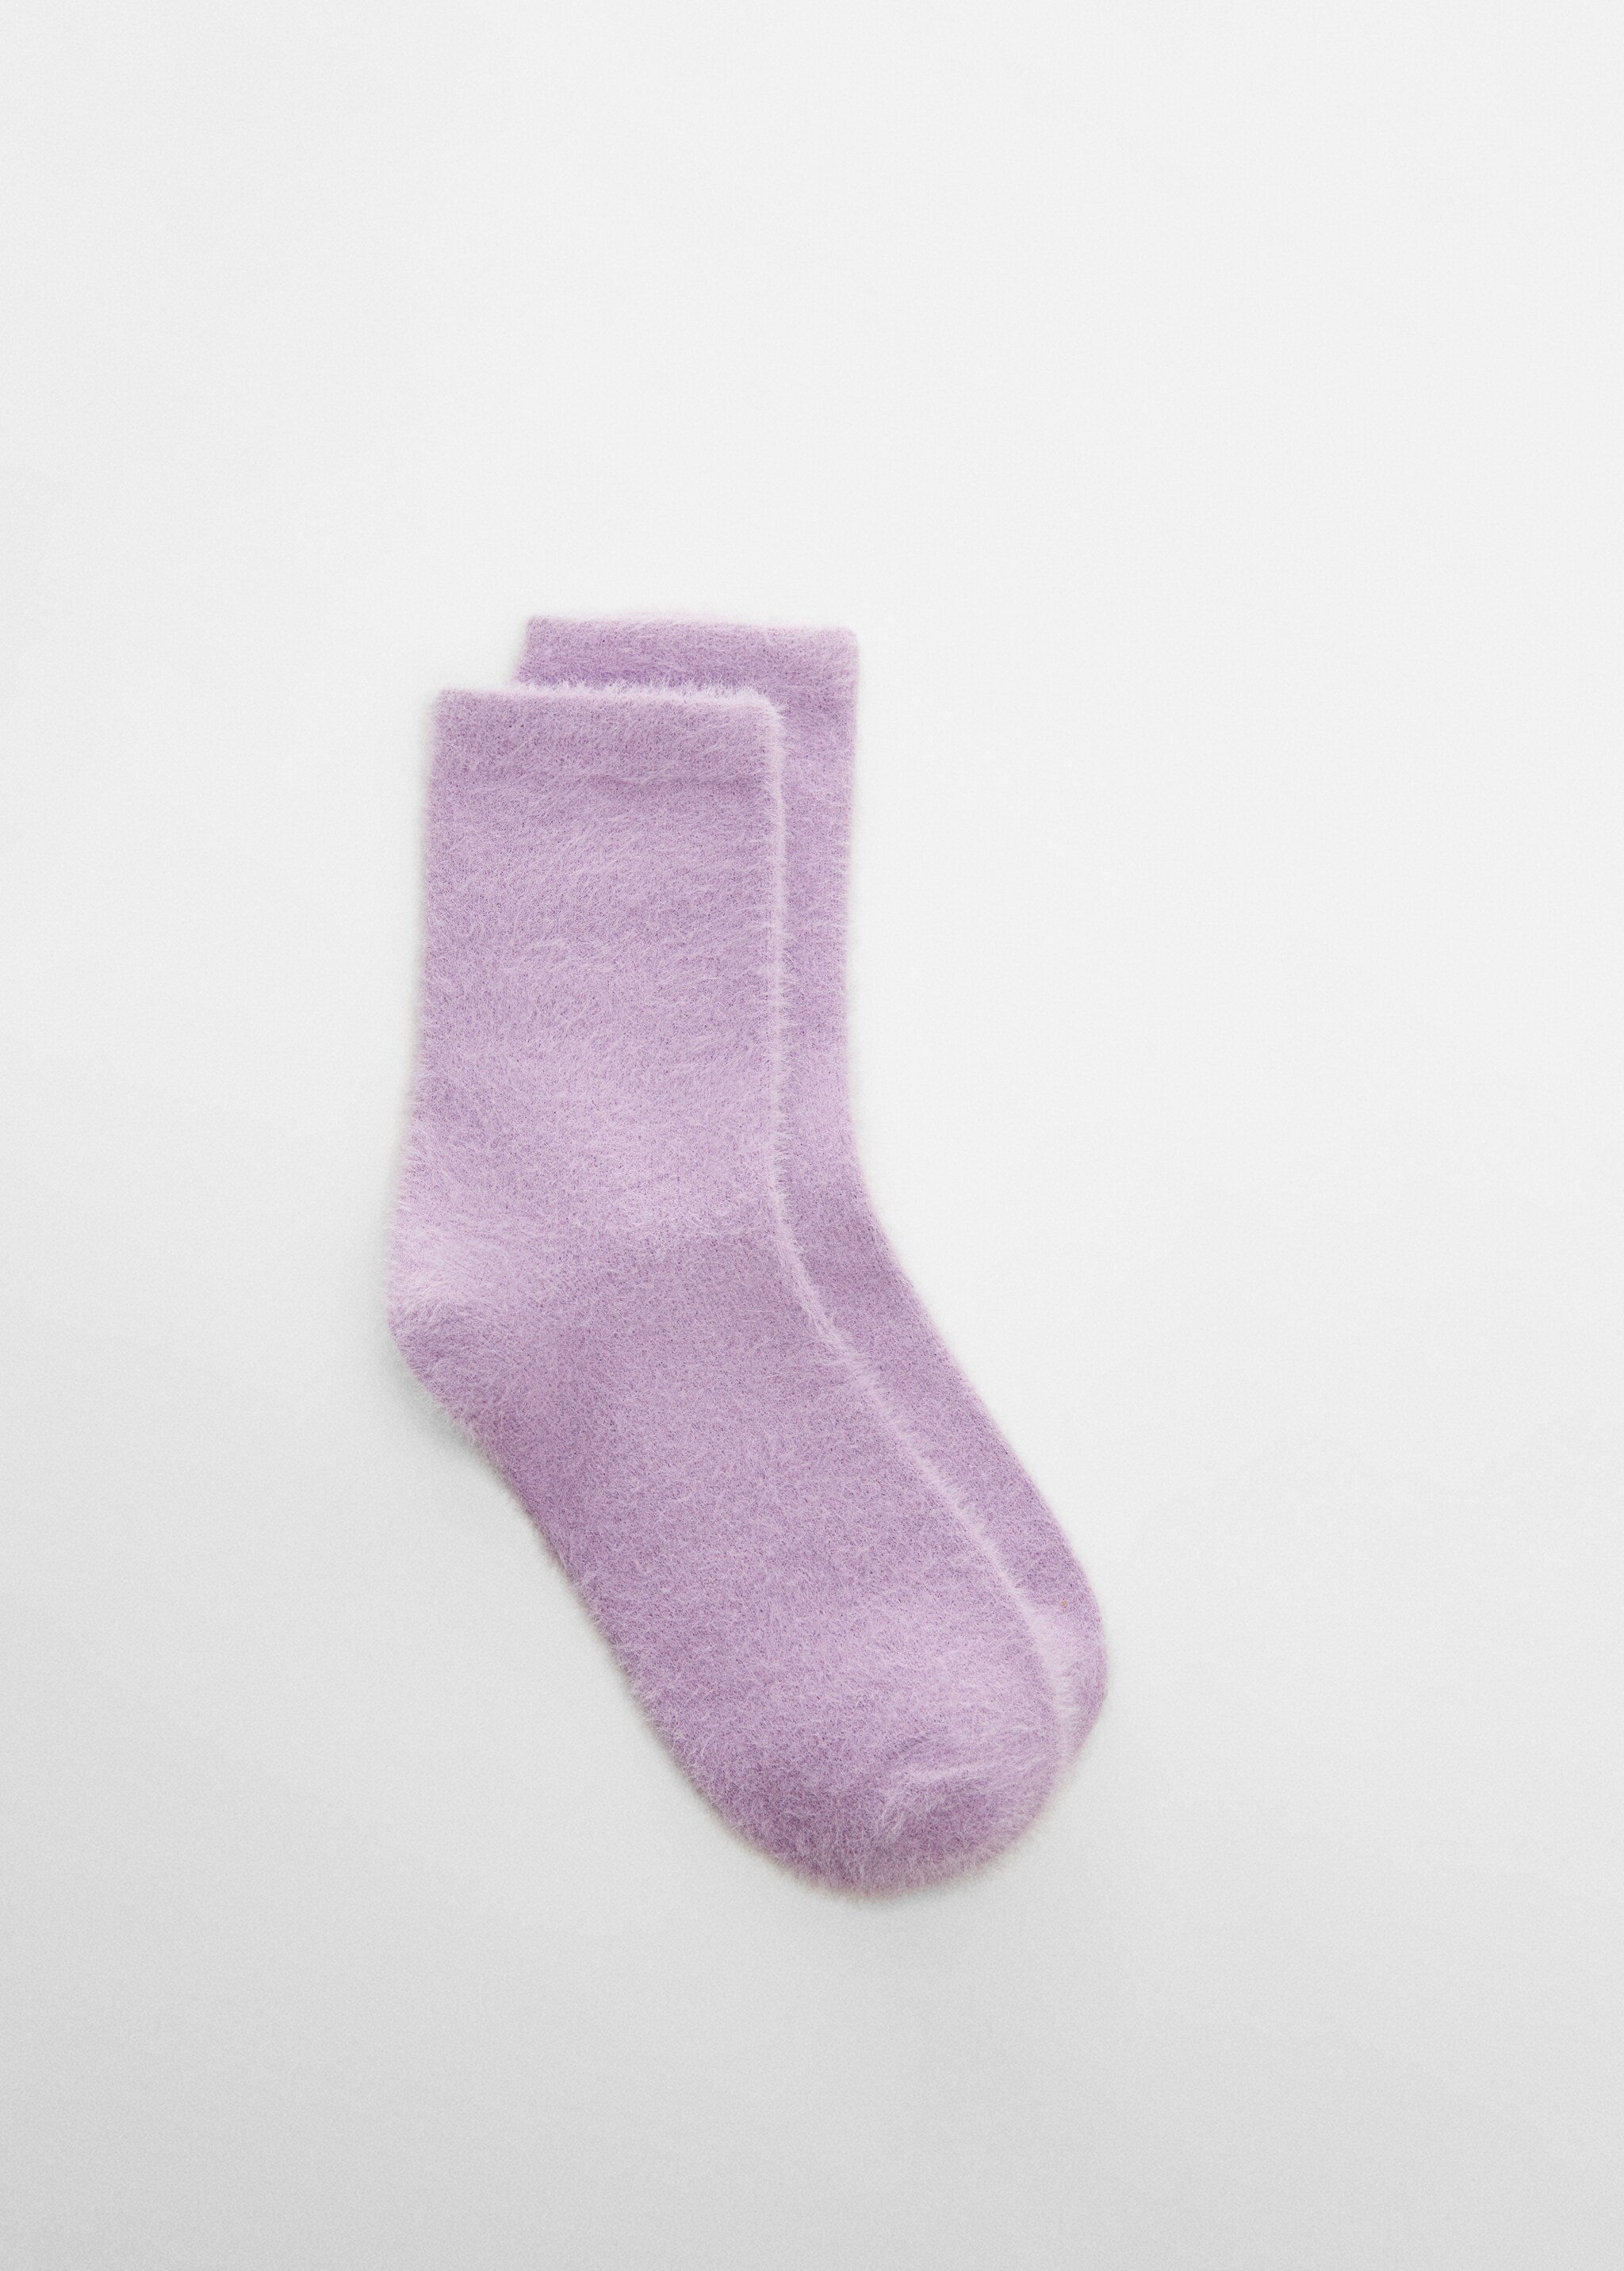 Soft finish socks - Medium plane